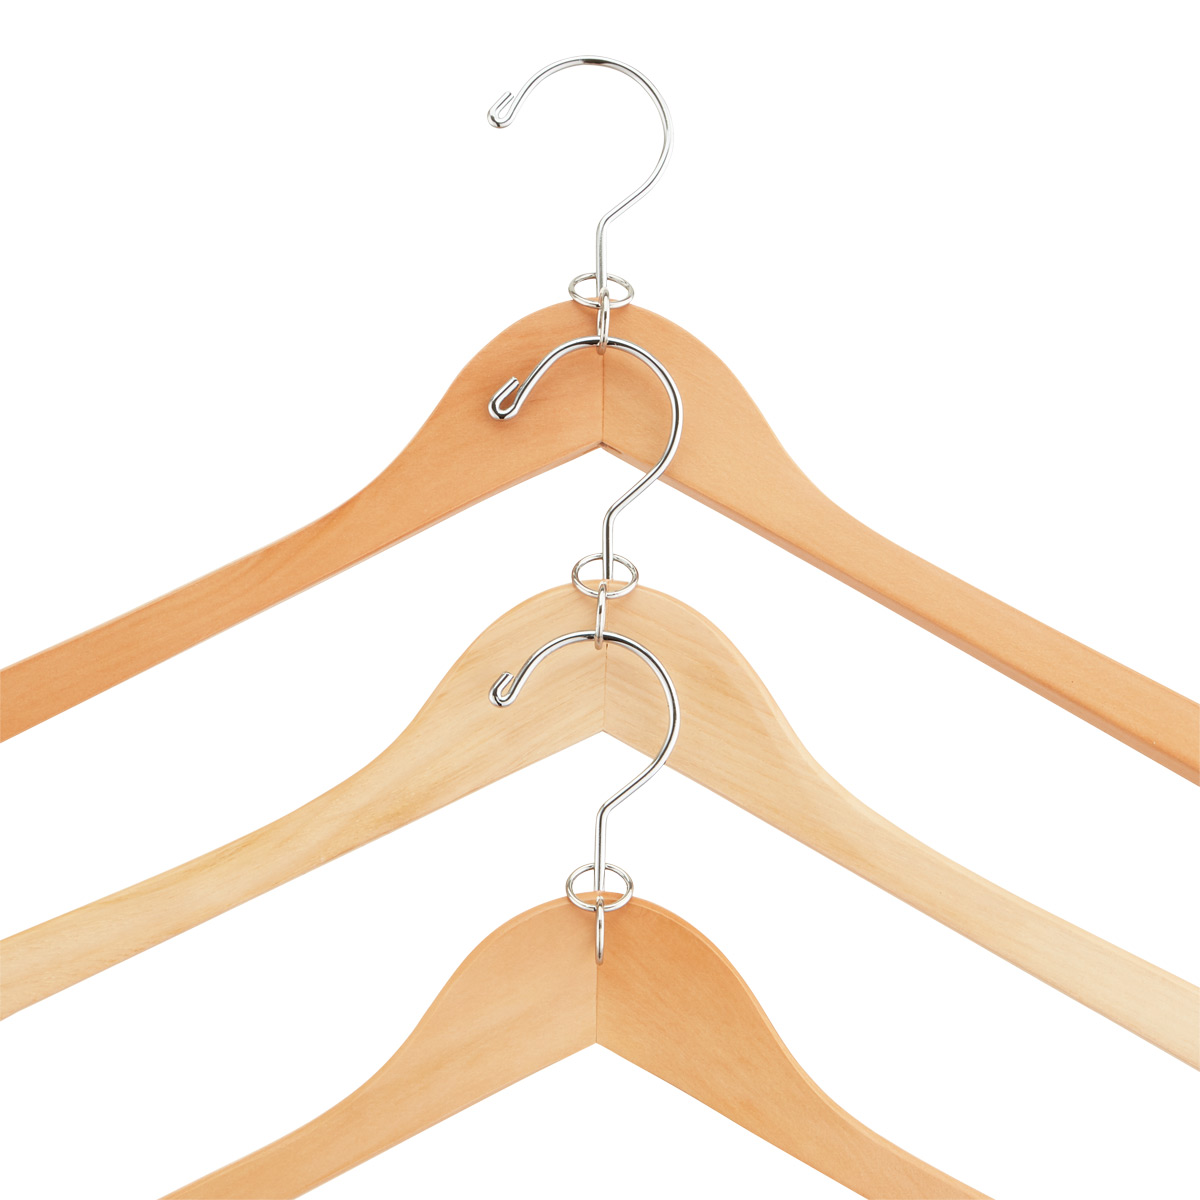 Adda Hanger-Connectors- Create Waterfall Clothing Hanger Storage, Clea –